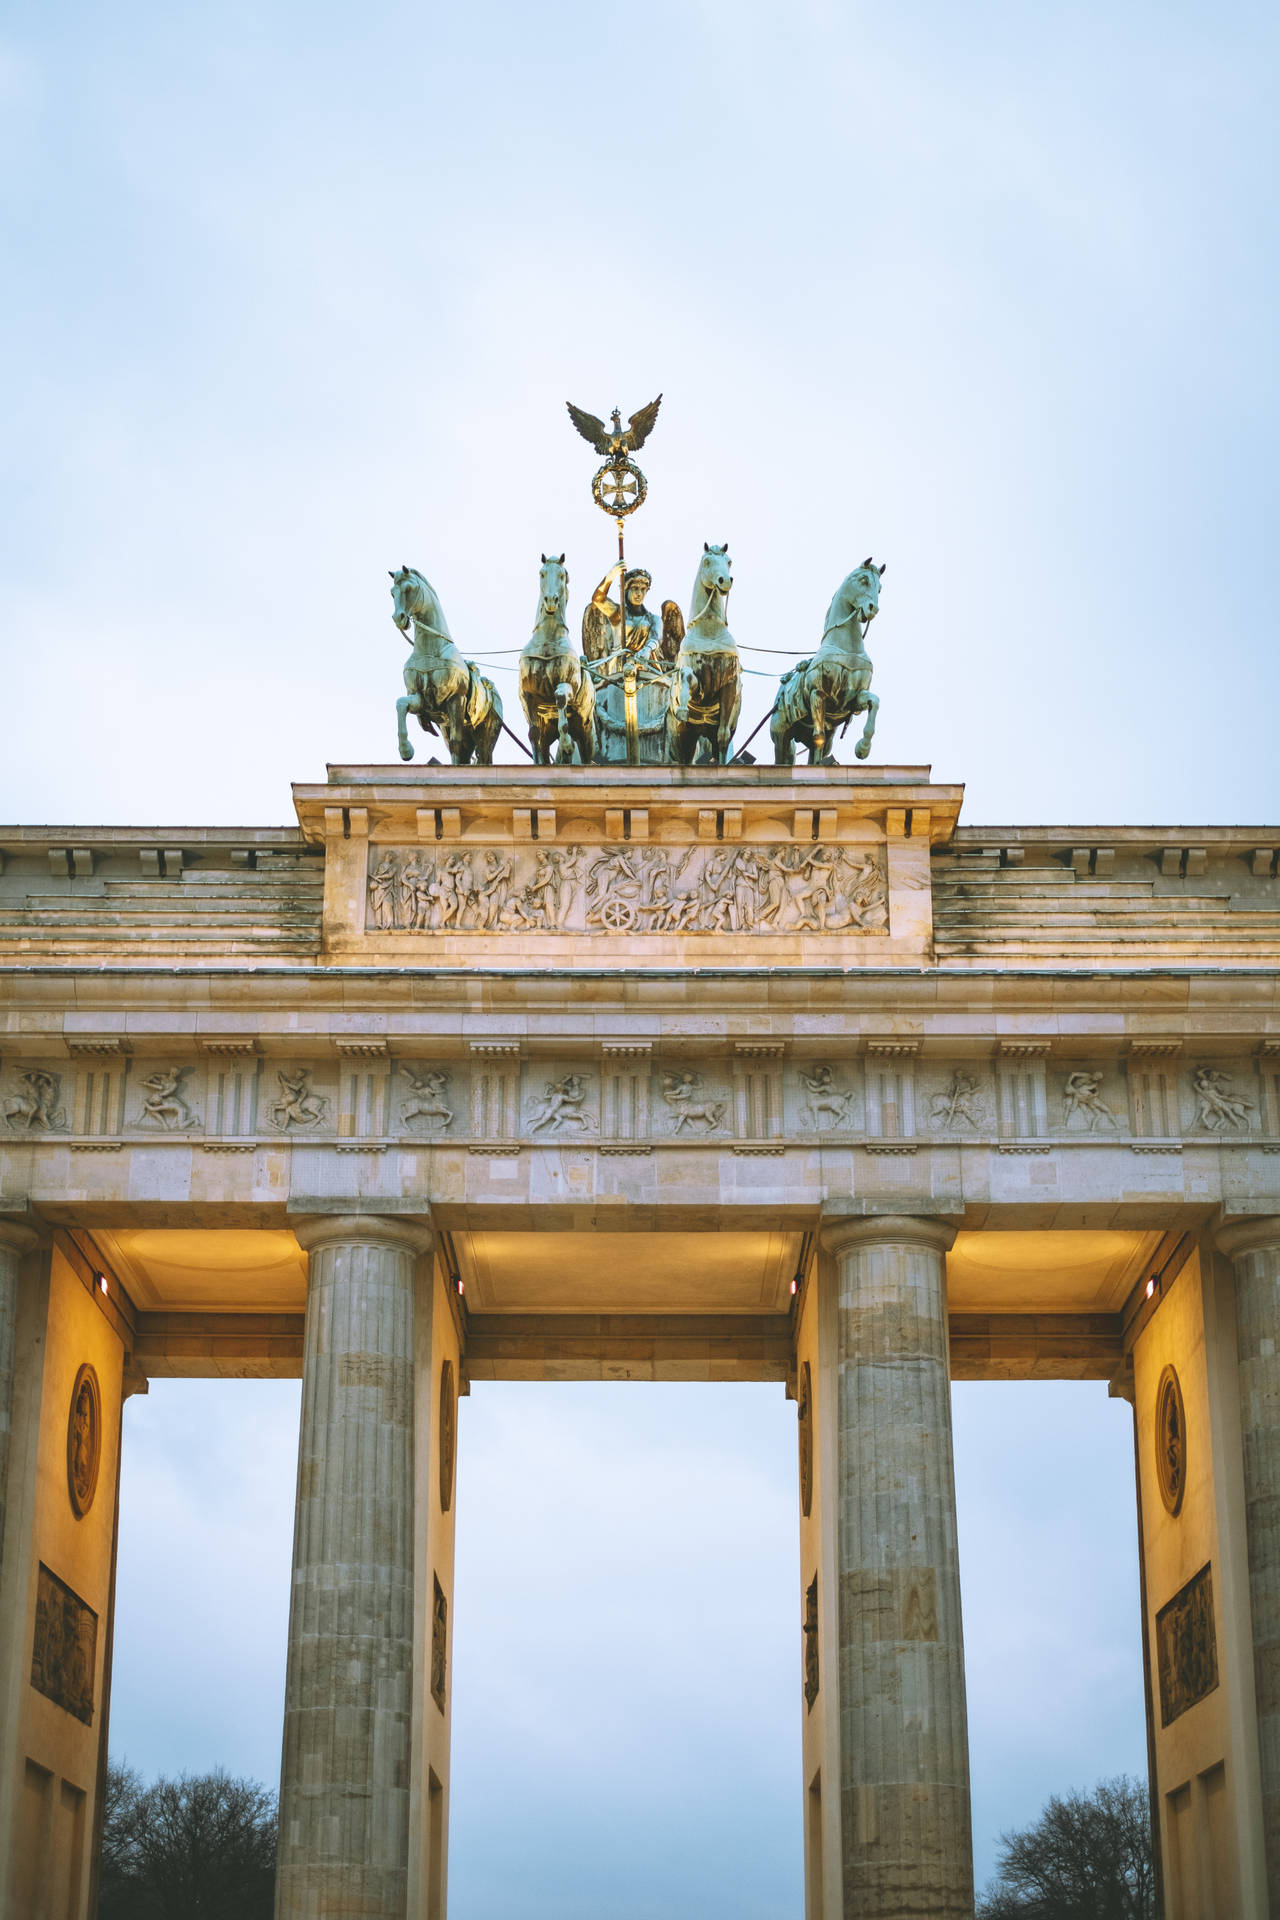 Germany's Symbolic Arch Pillar